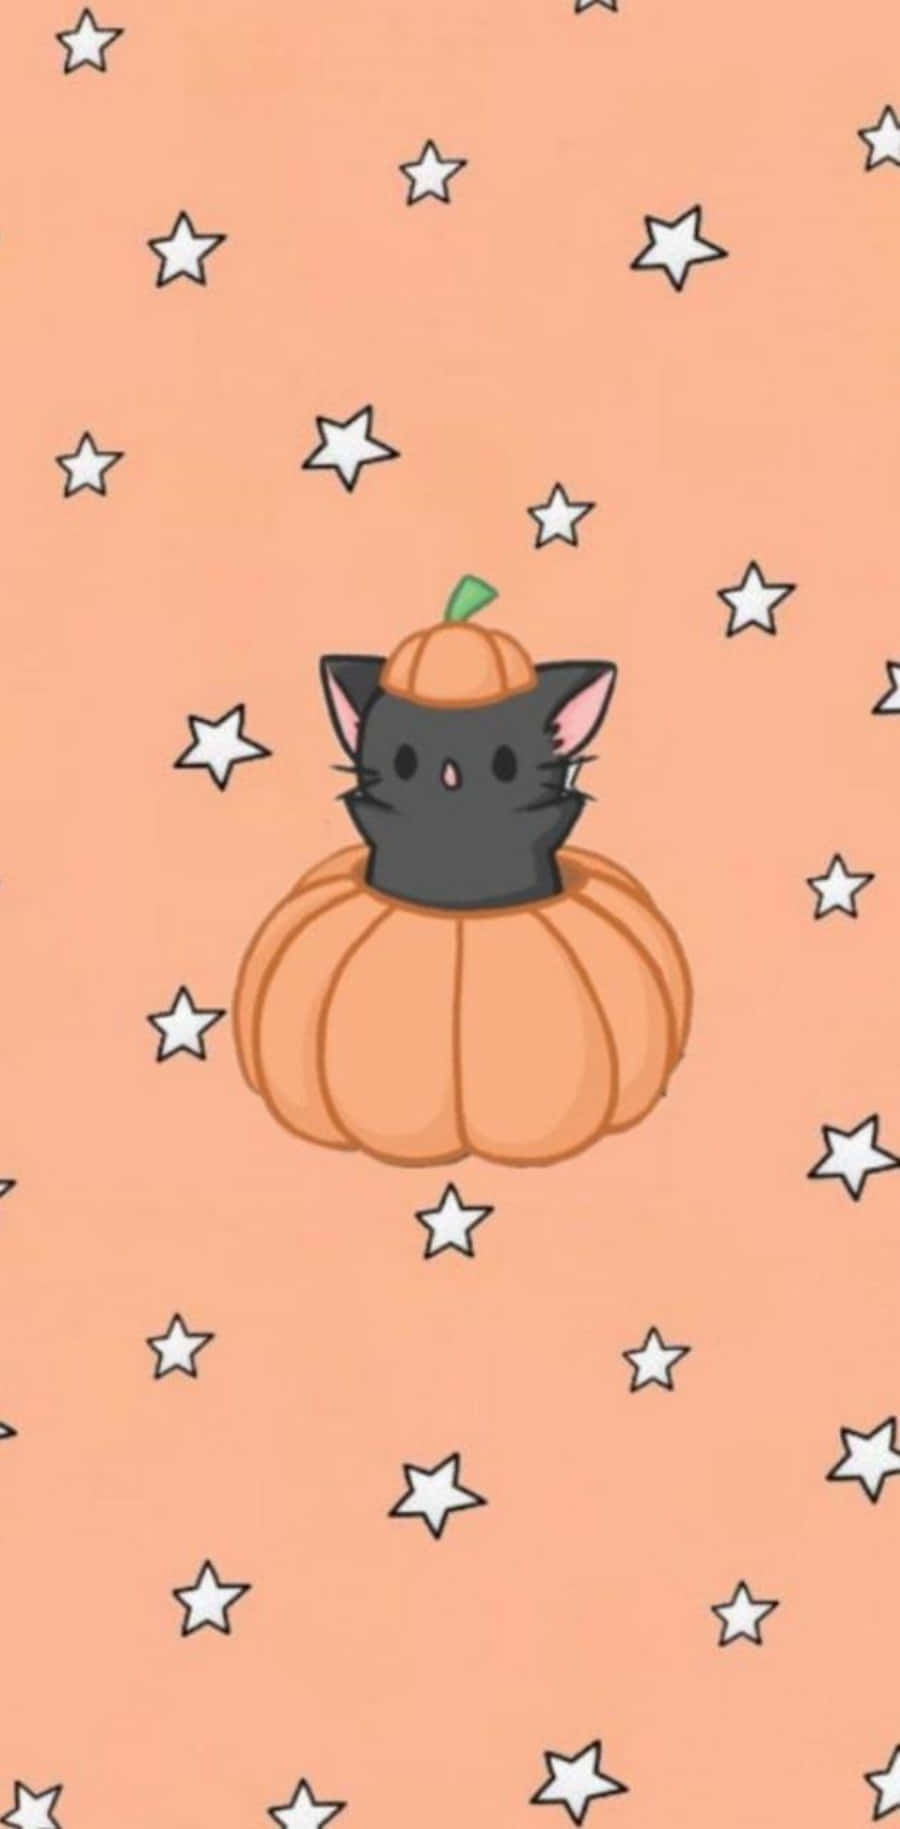 Spooky and cute Halloween cat with orange pumpkin